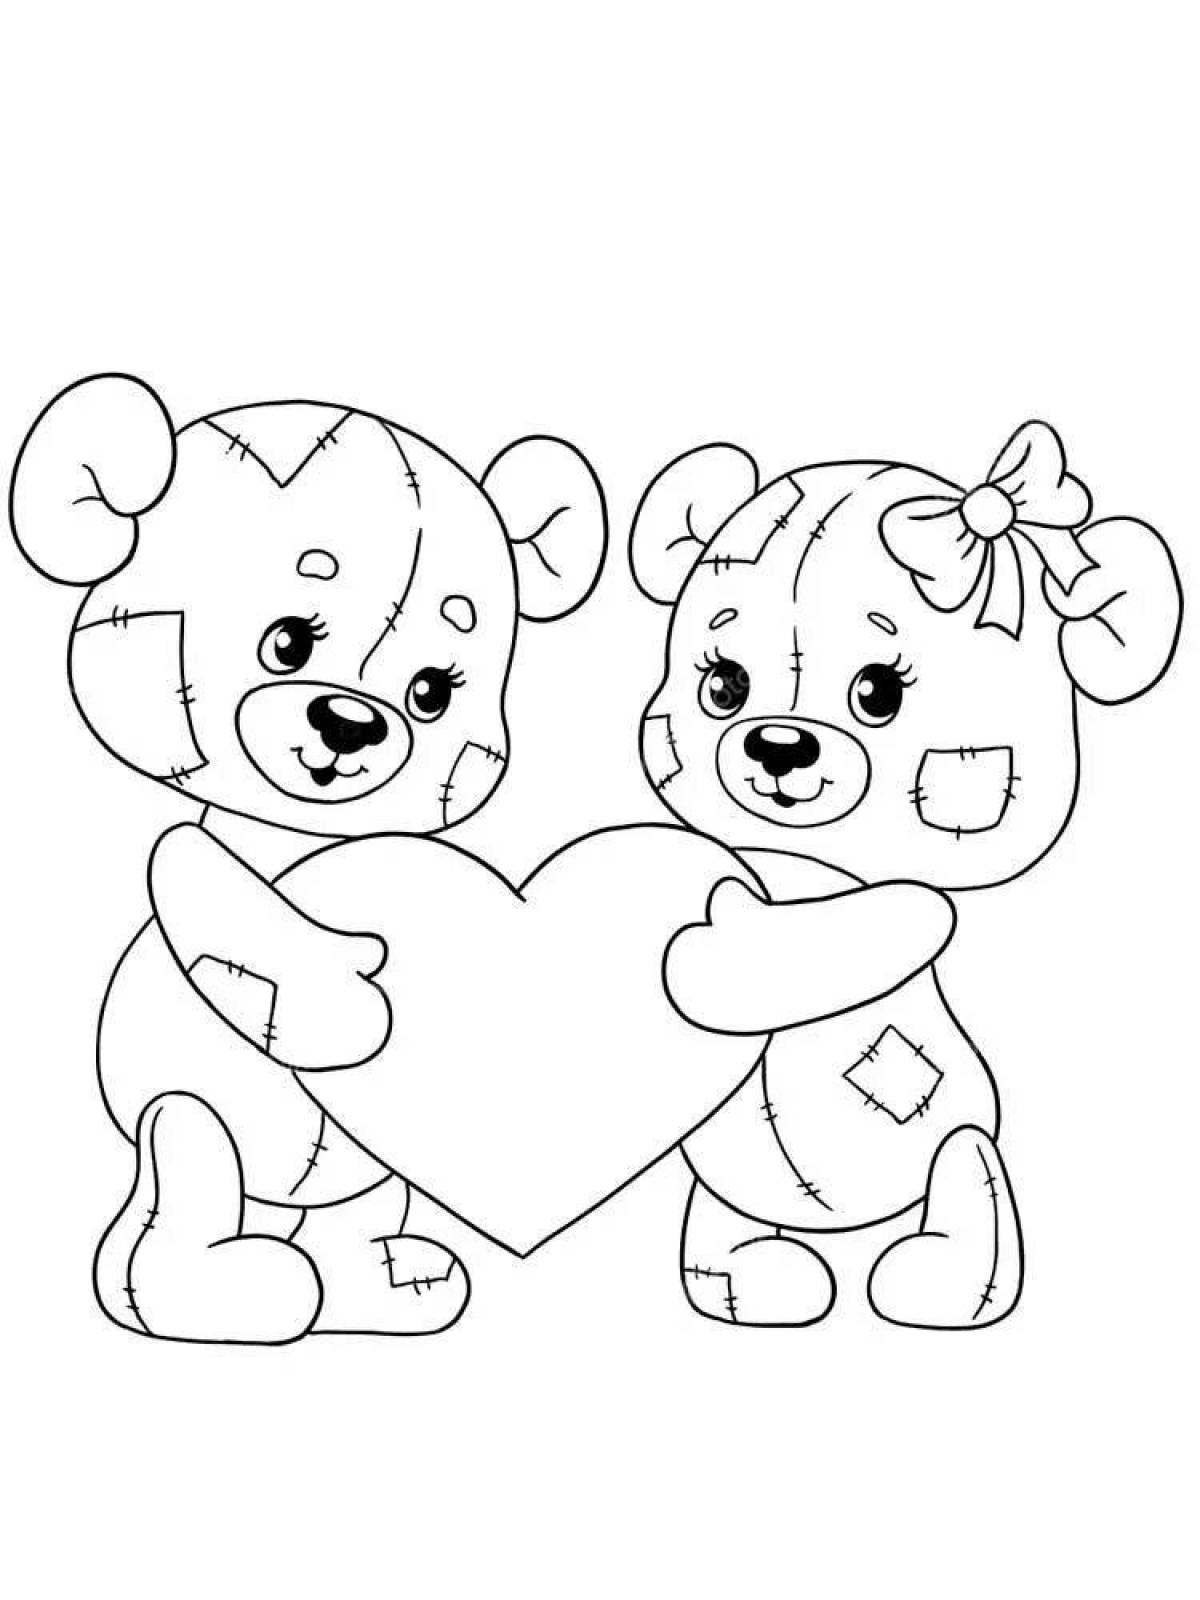 Adorable teddy bear with heart coloring book